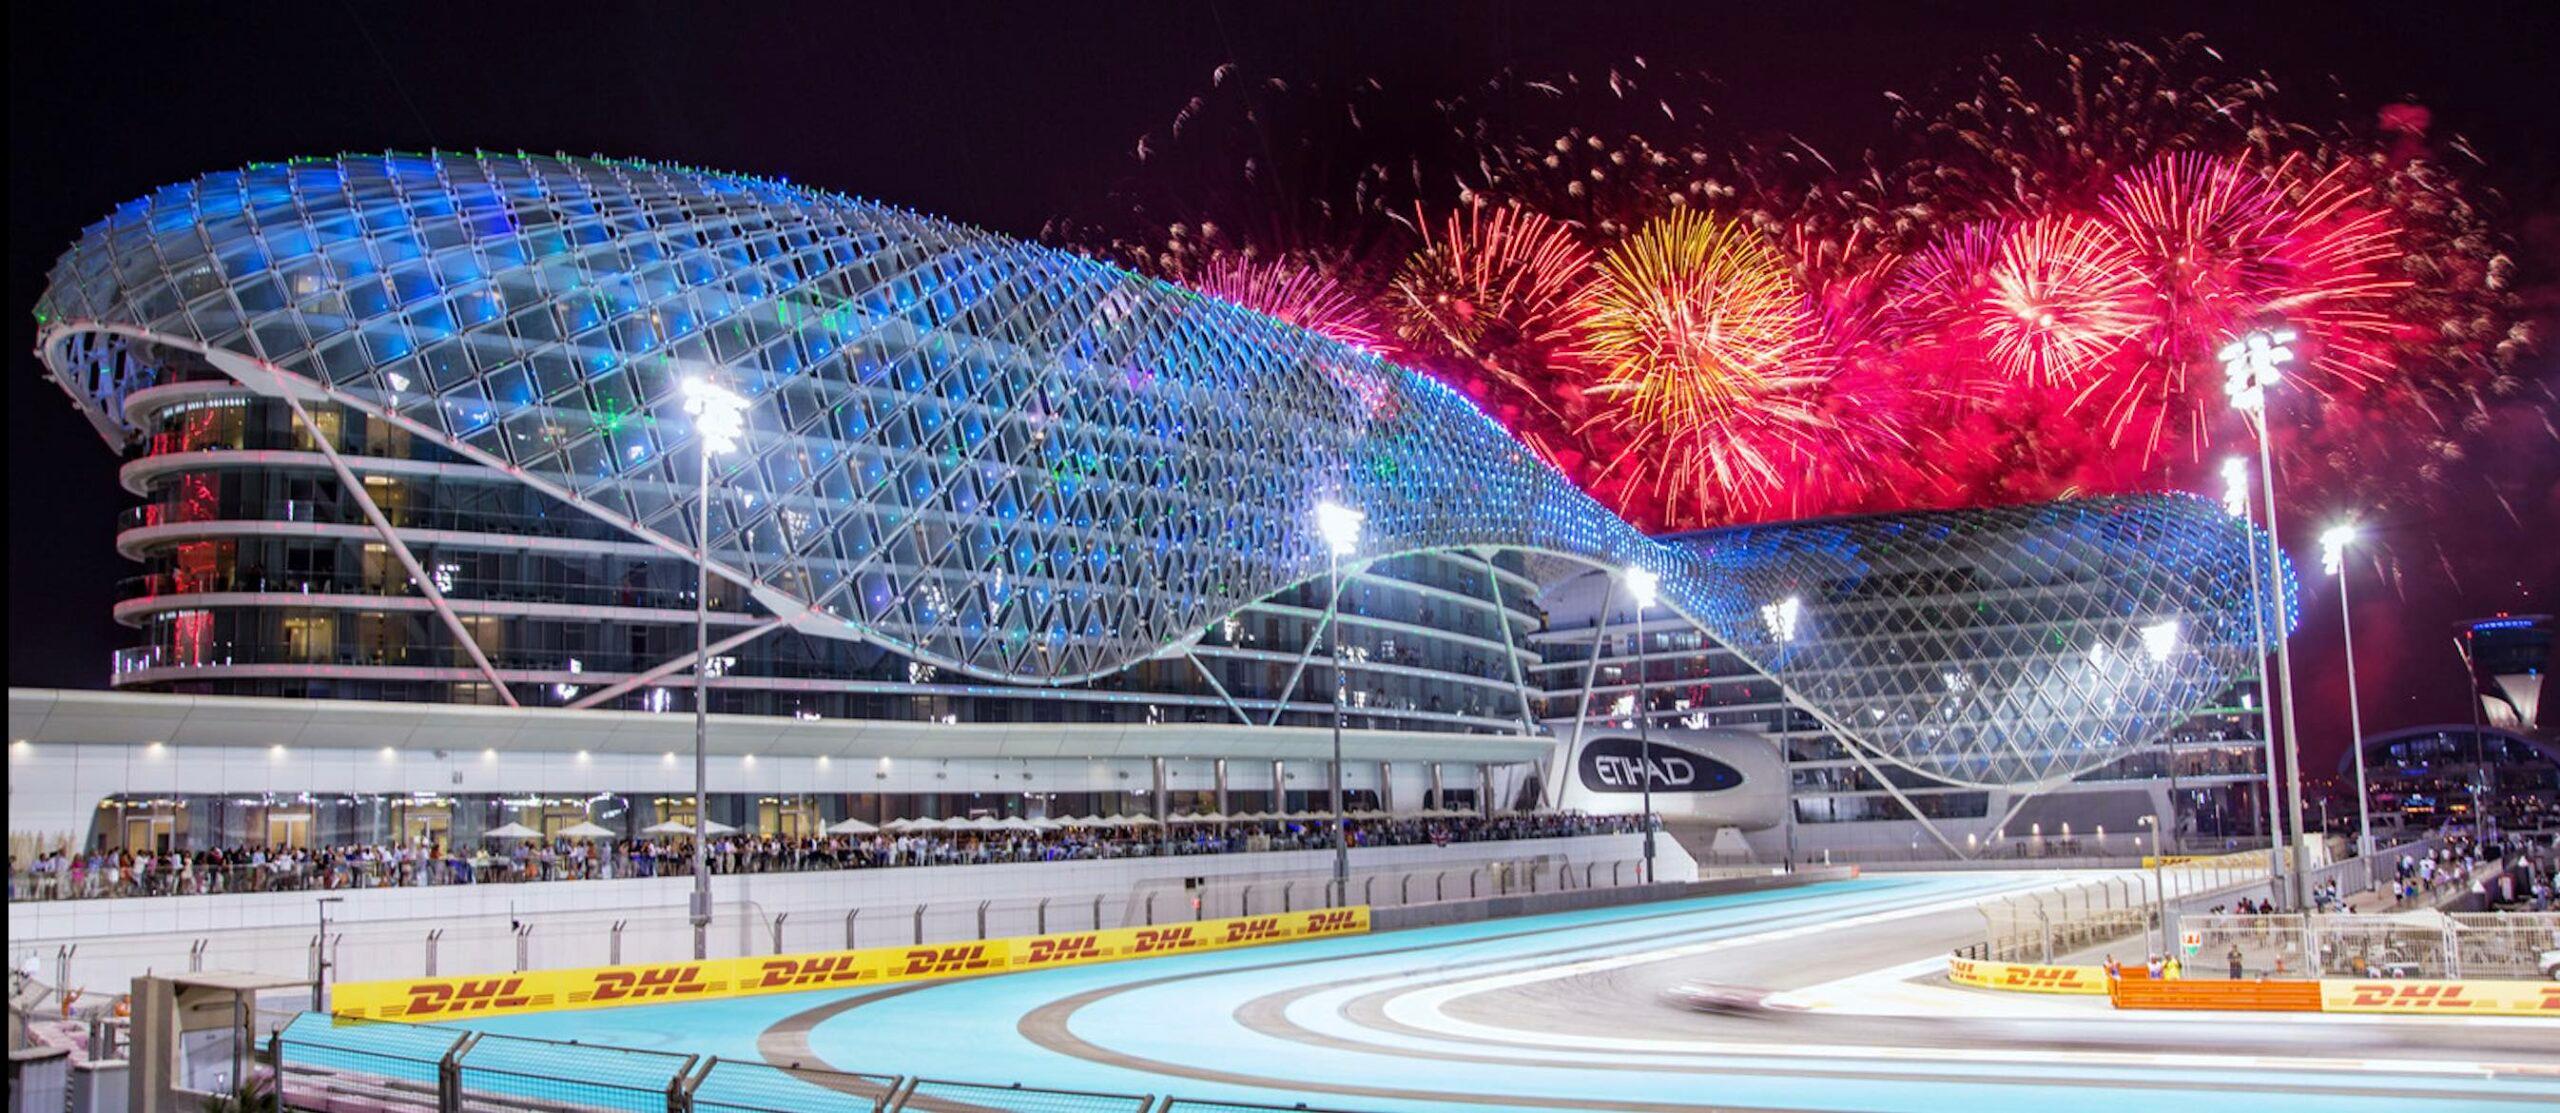 Where to celebrate New Year's Eve in Abu Dhabi